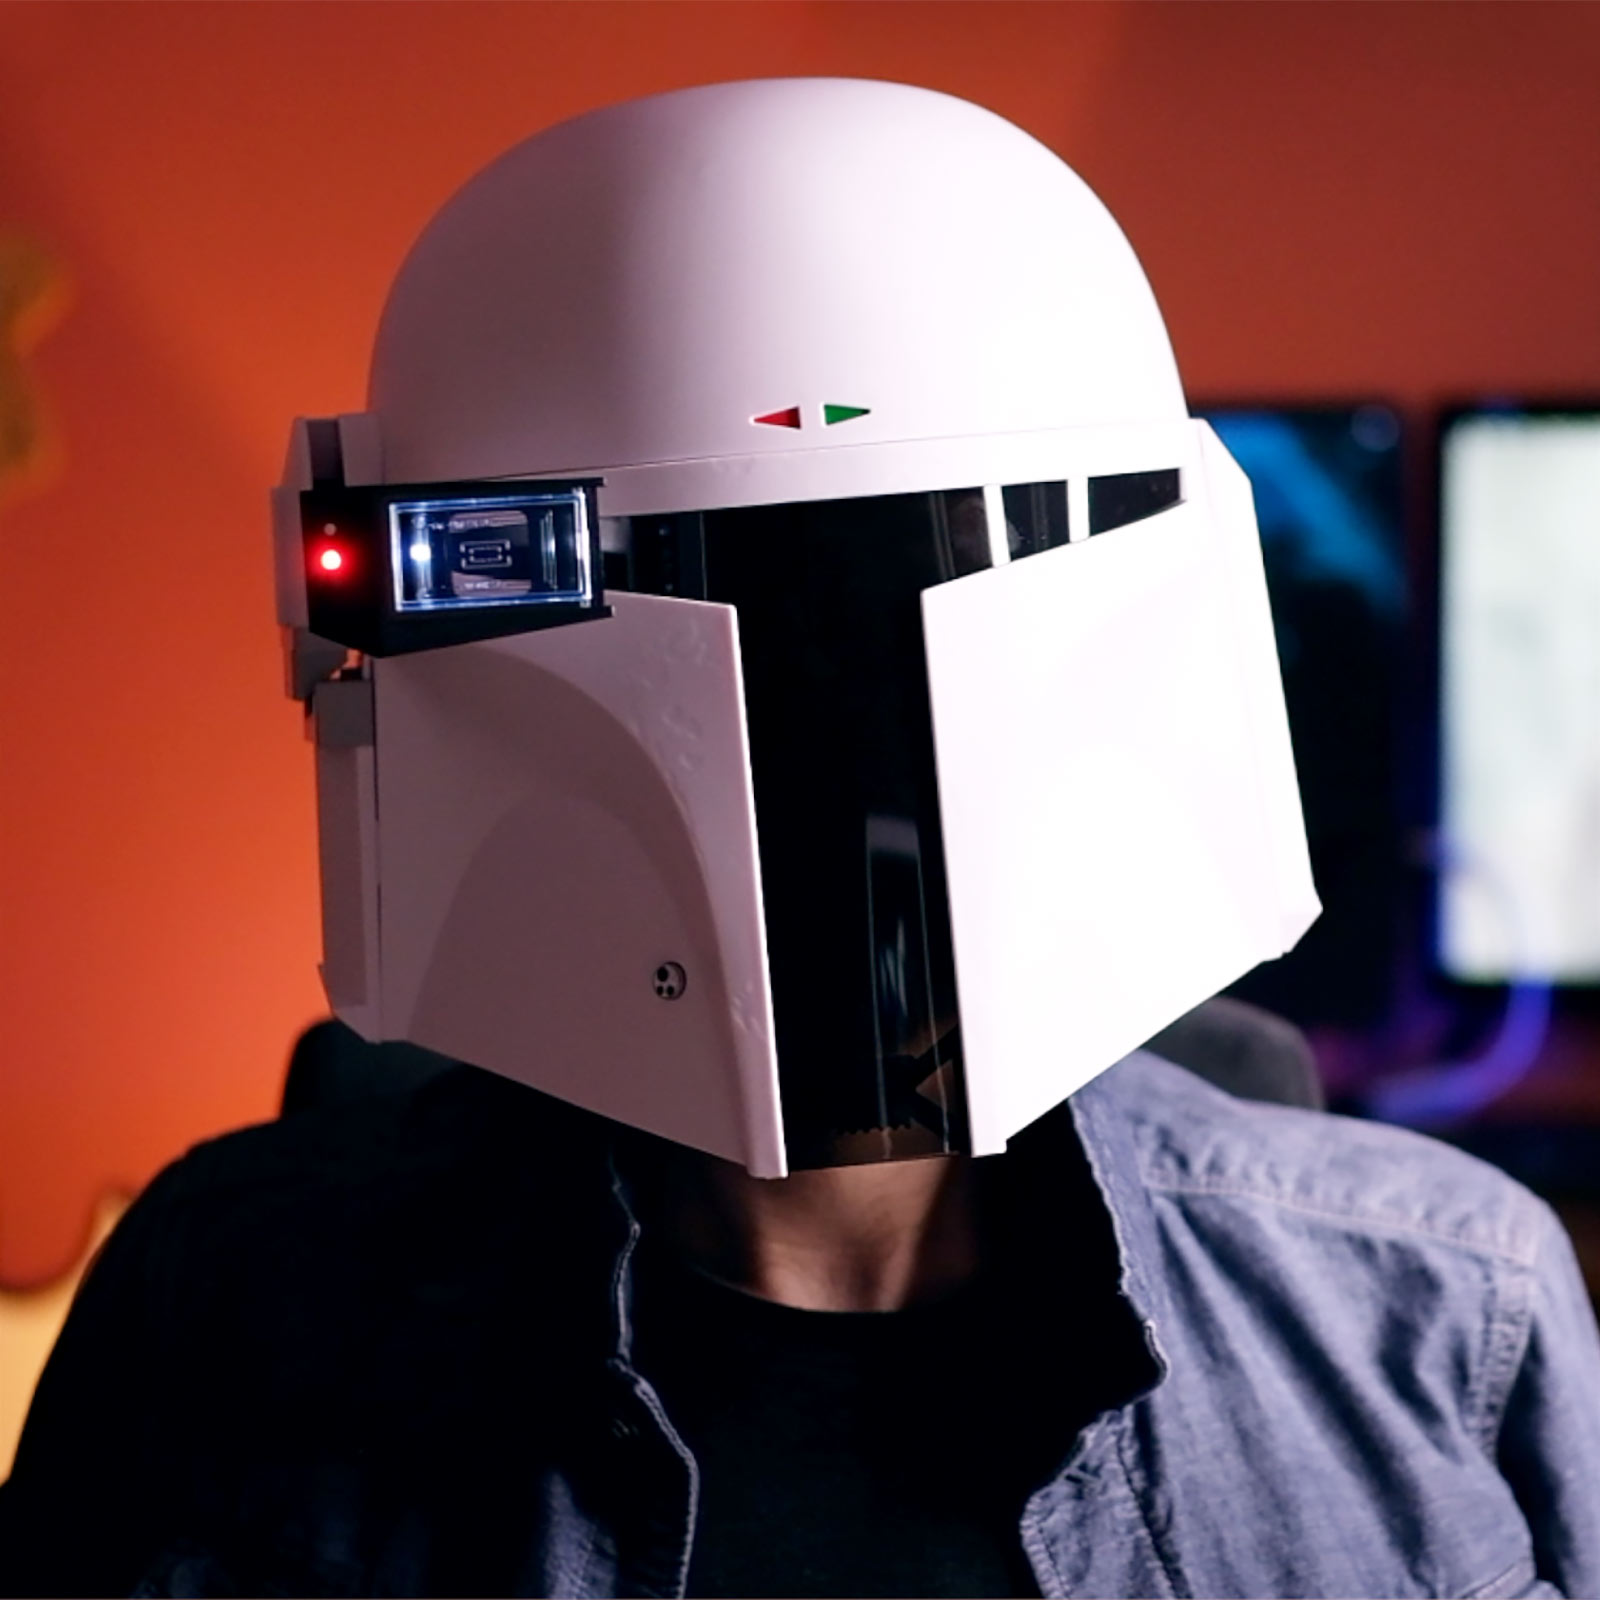 Star Wars - Boba Fett Prototype Helmet Premium Replica with Light Effects